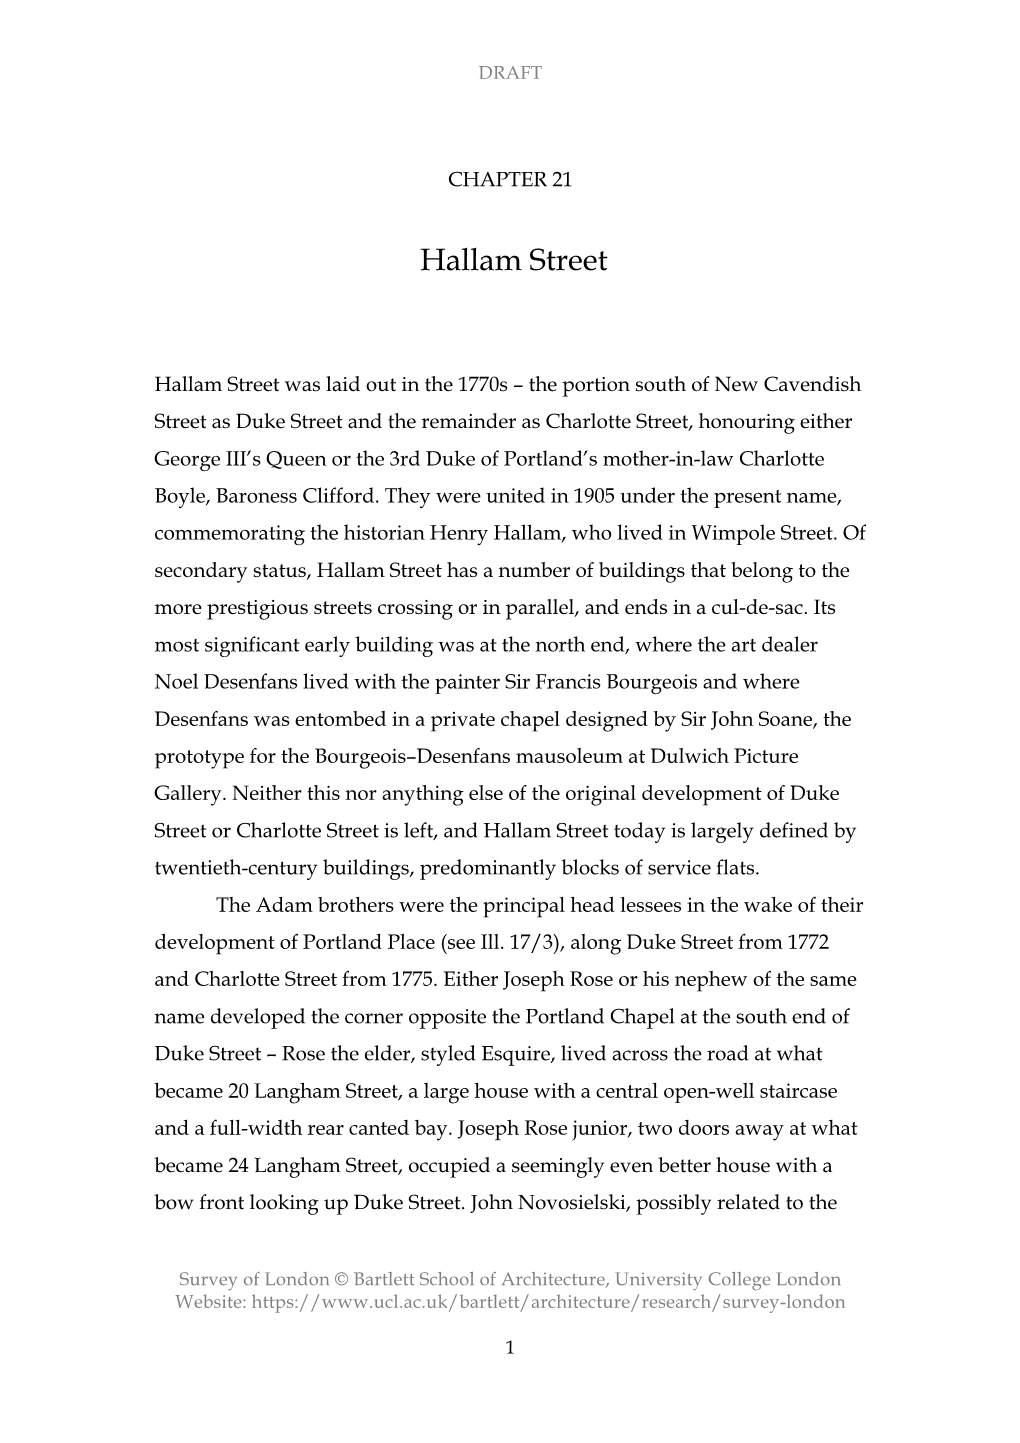 Chapter 21: Hallam Street